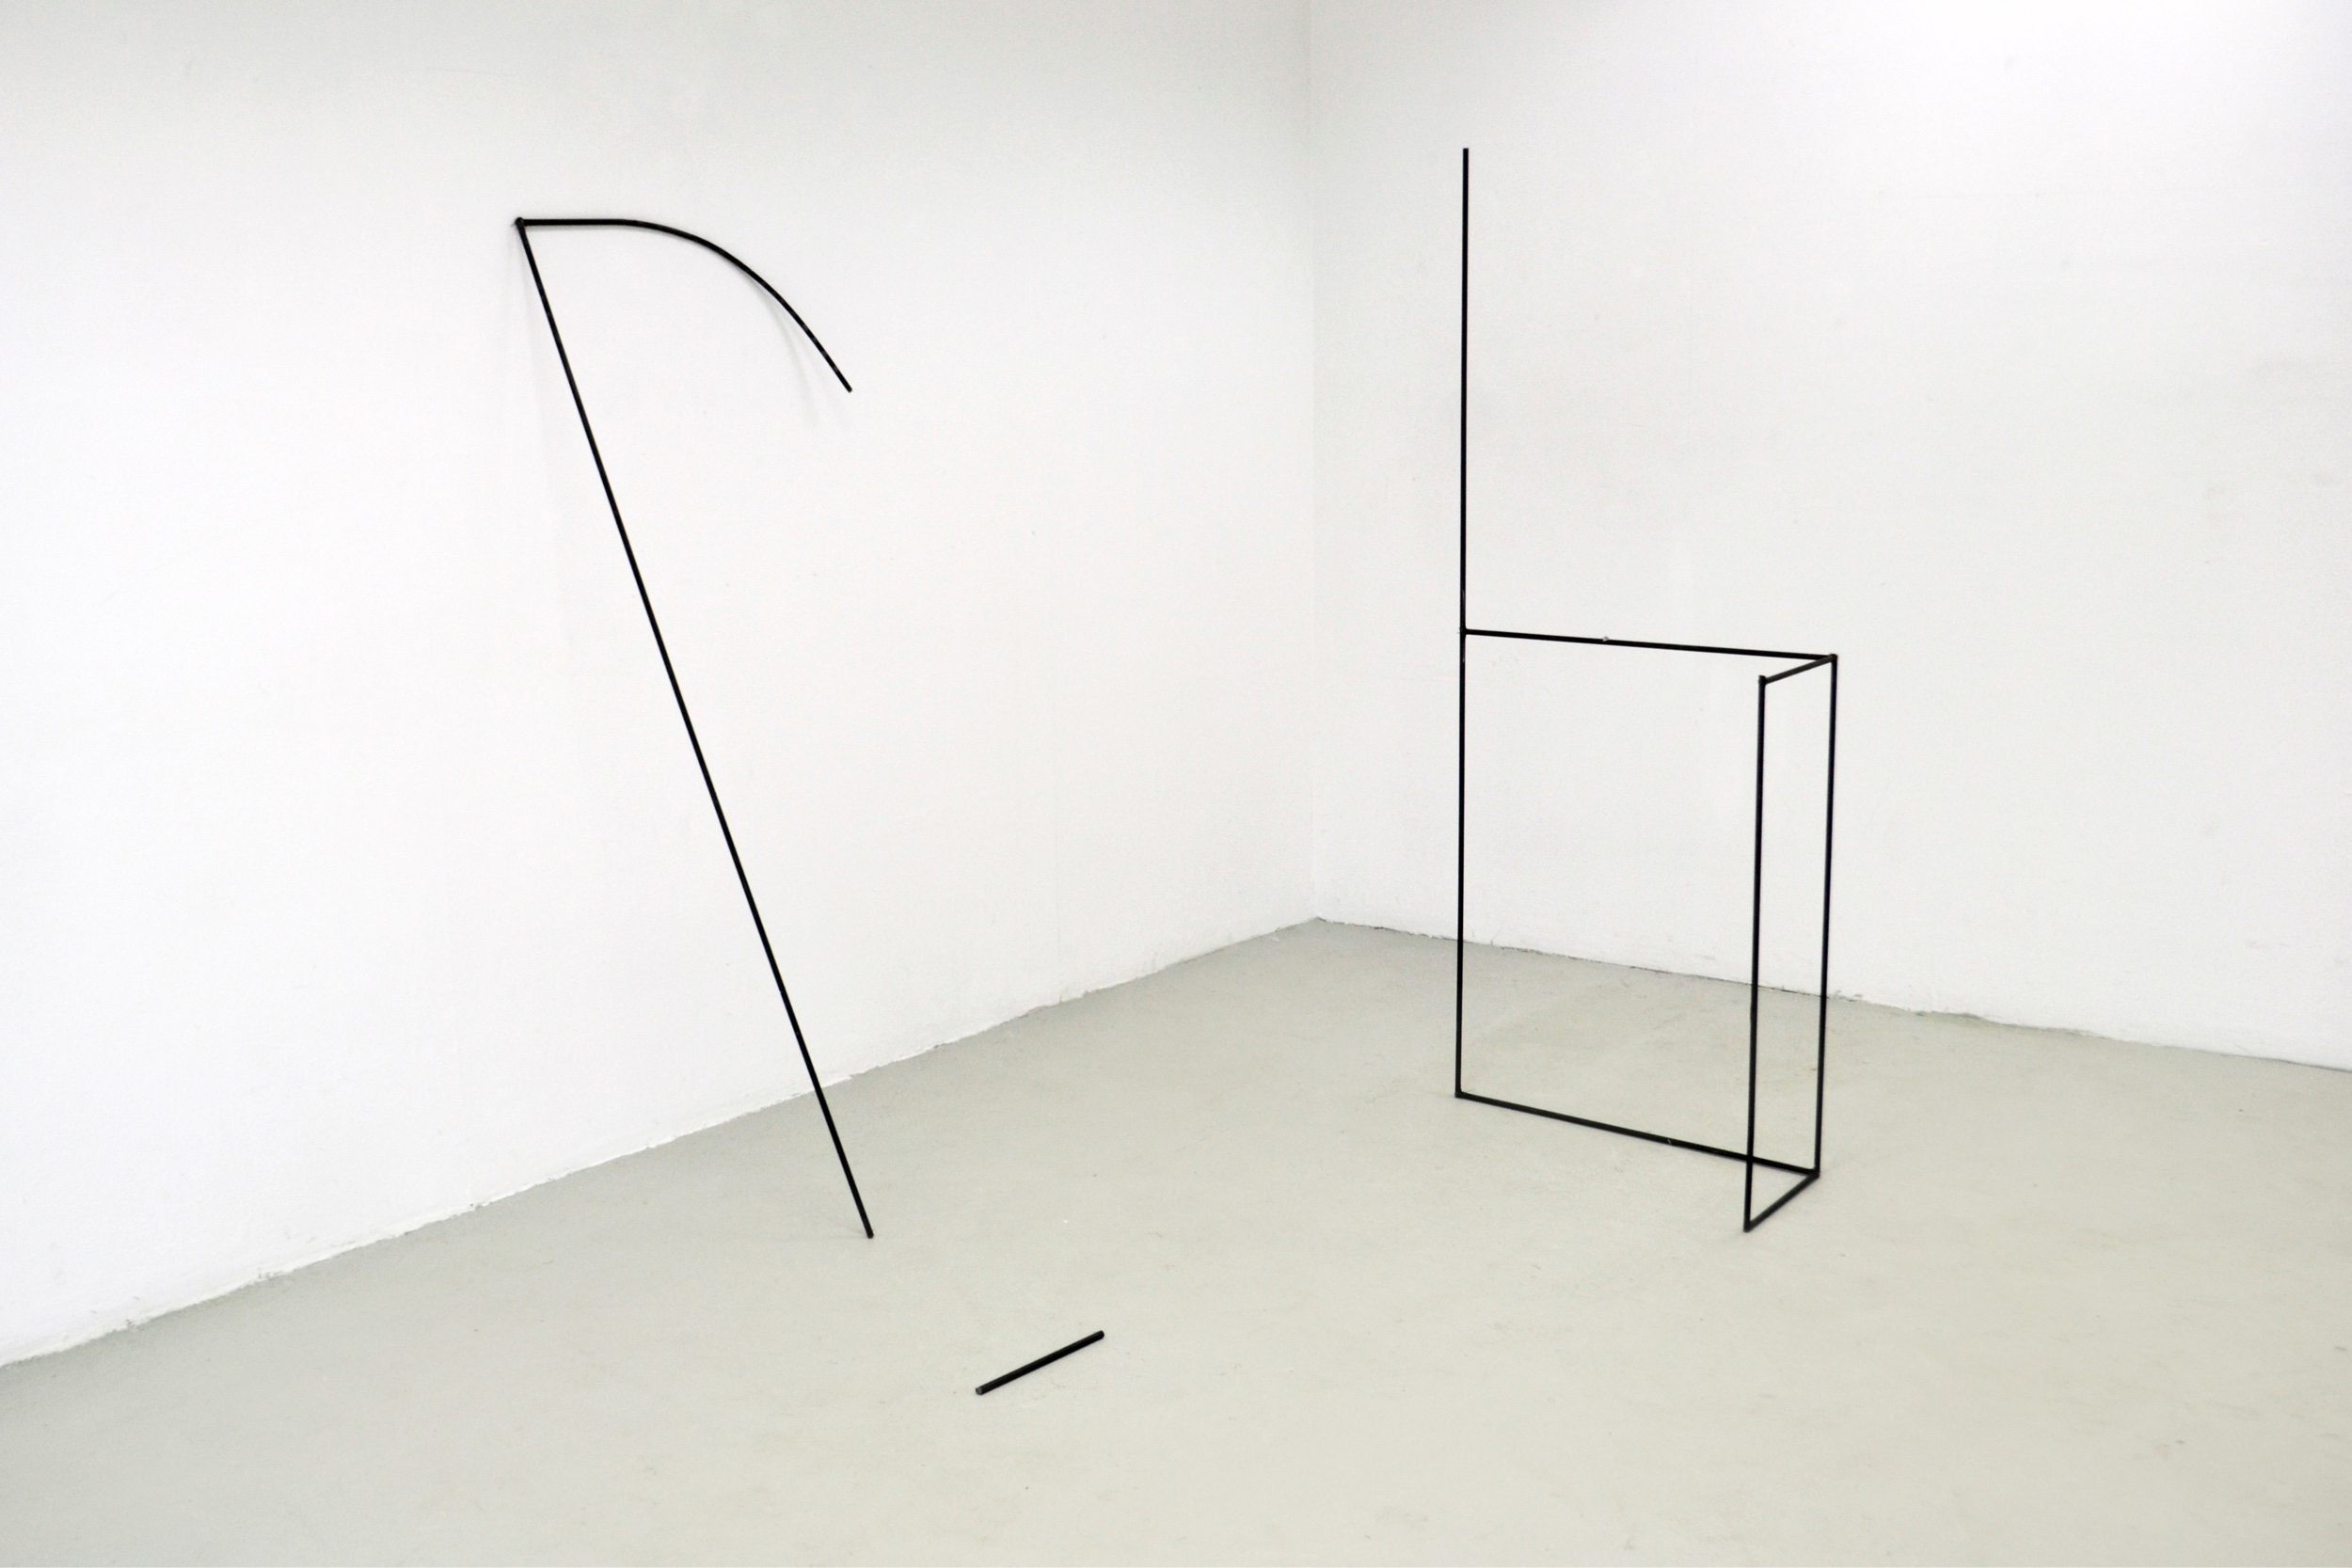 Platonic Solid, Camille Yvert, 2015